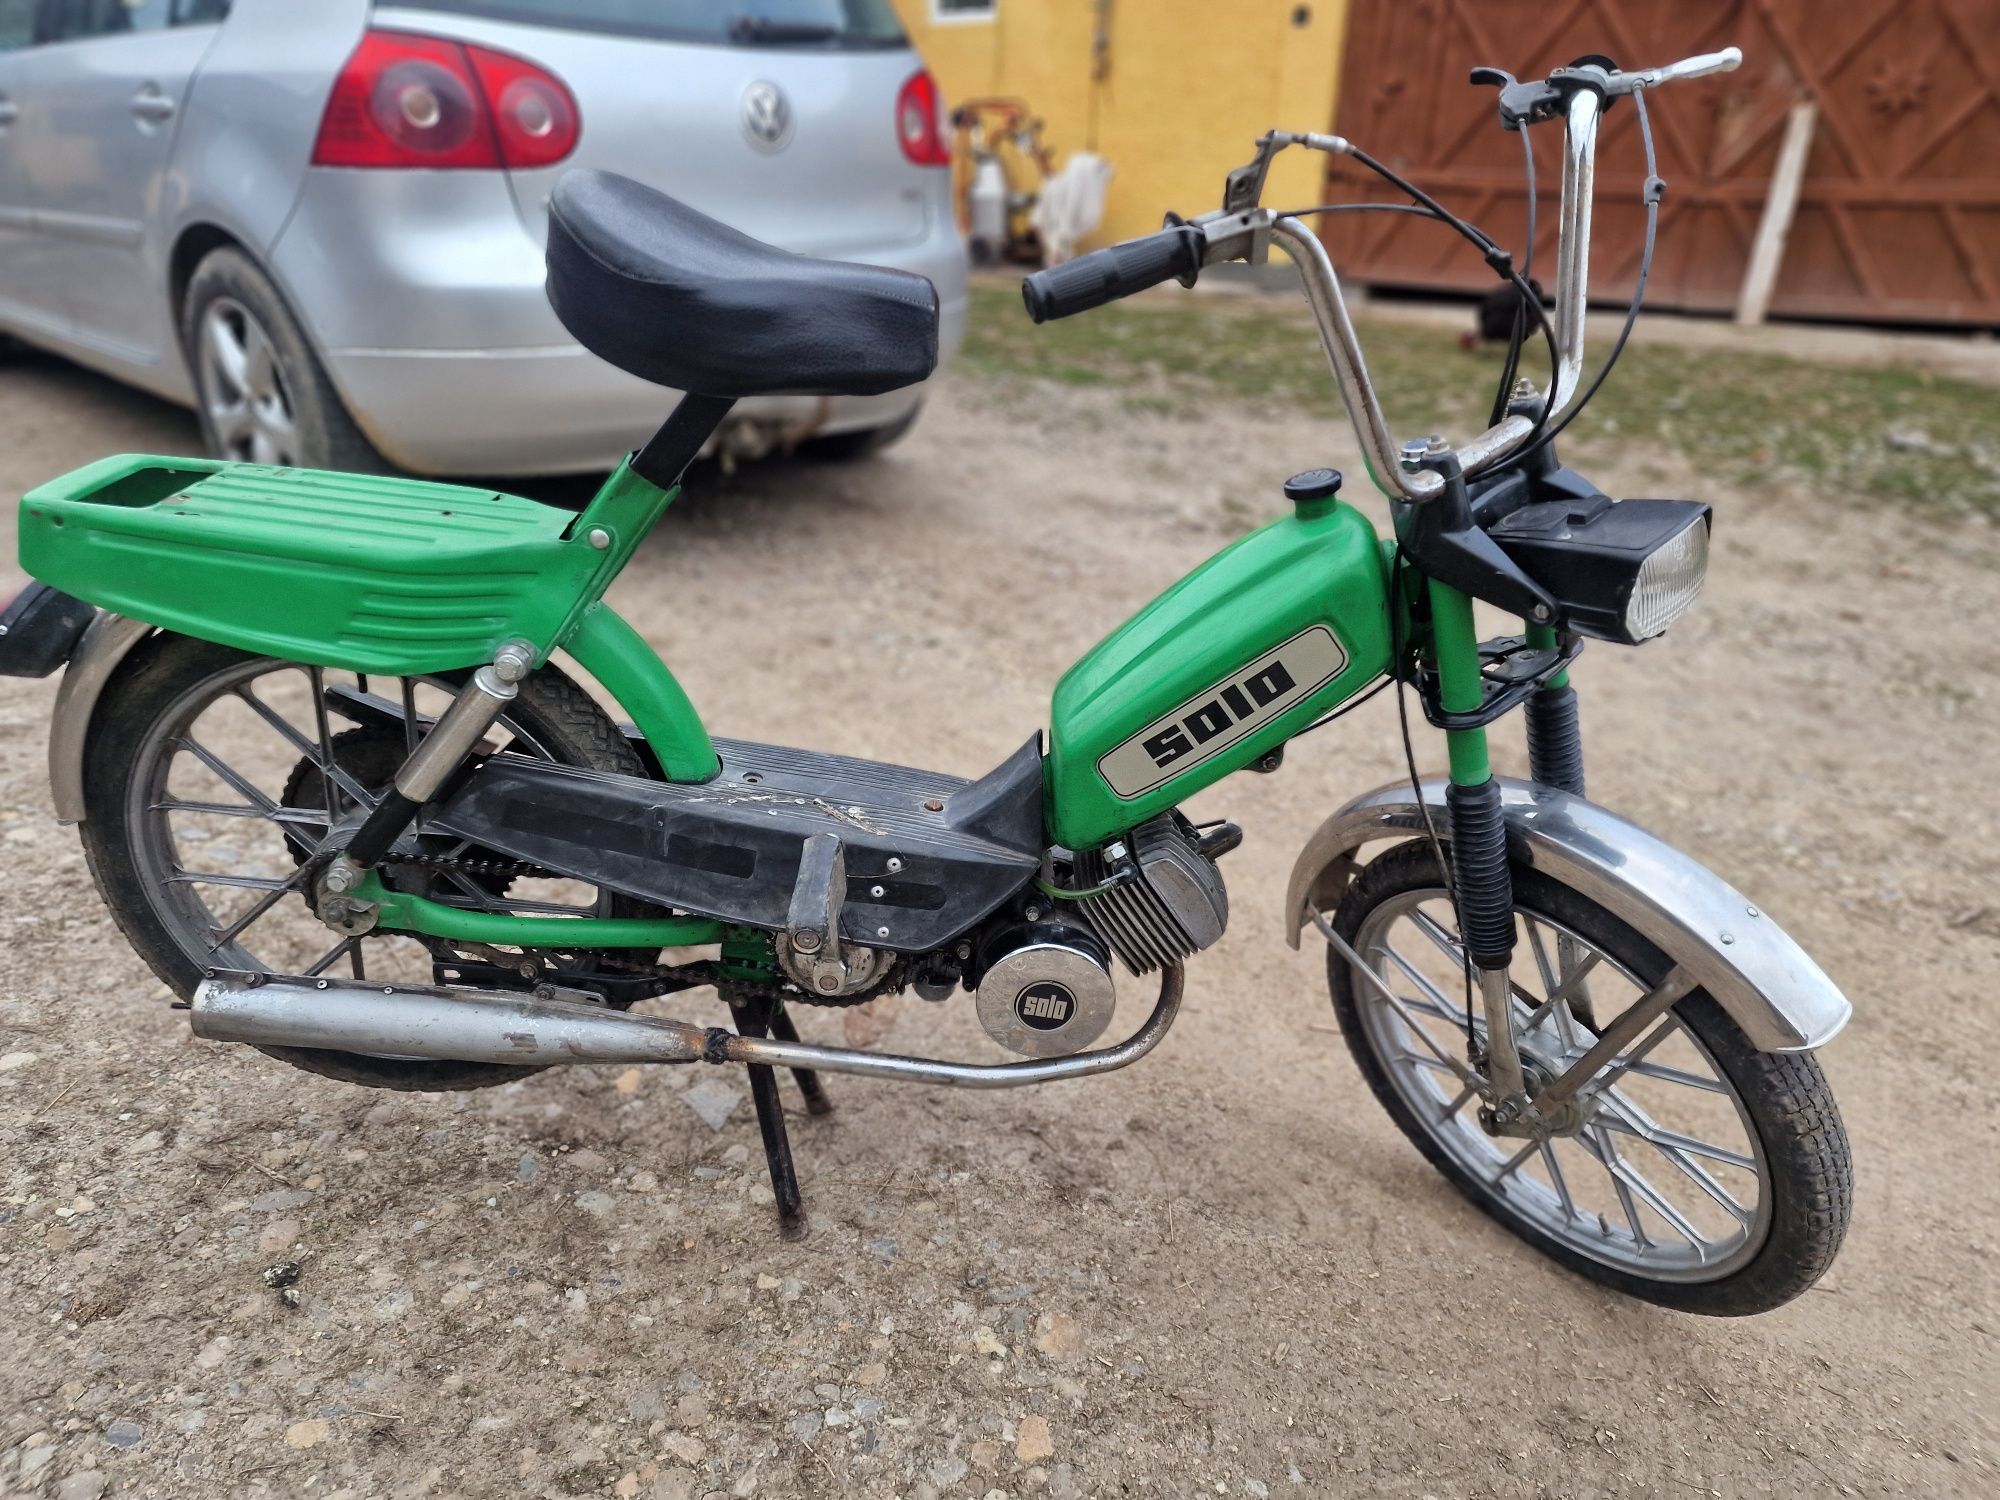 Moped Solo anii 70